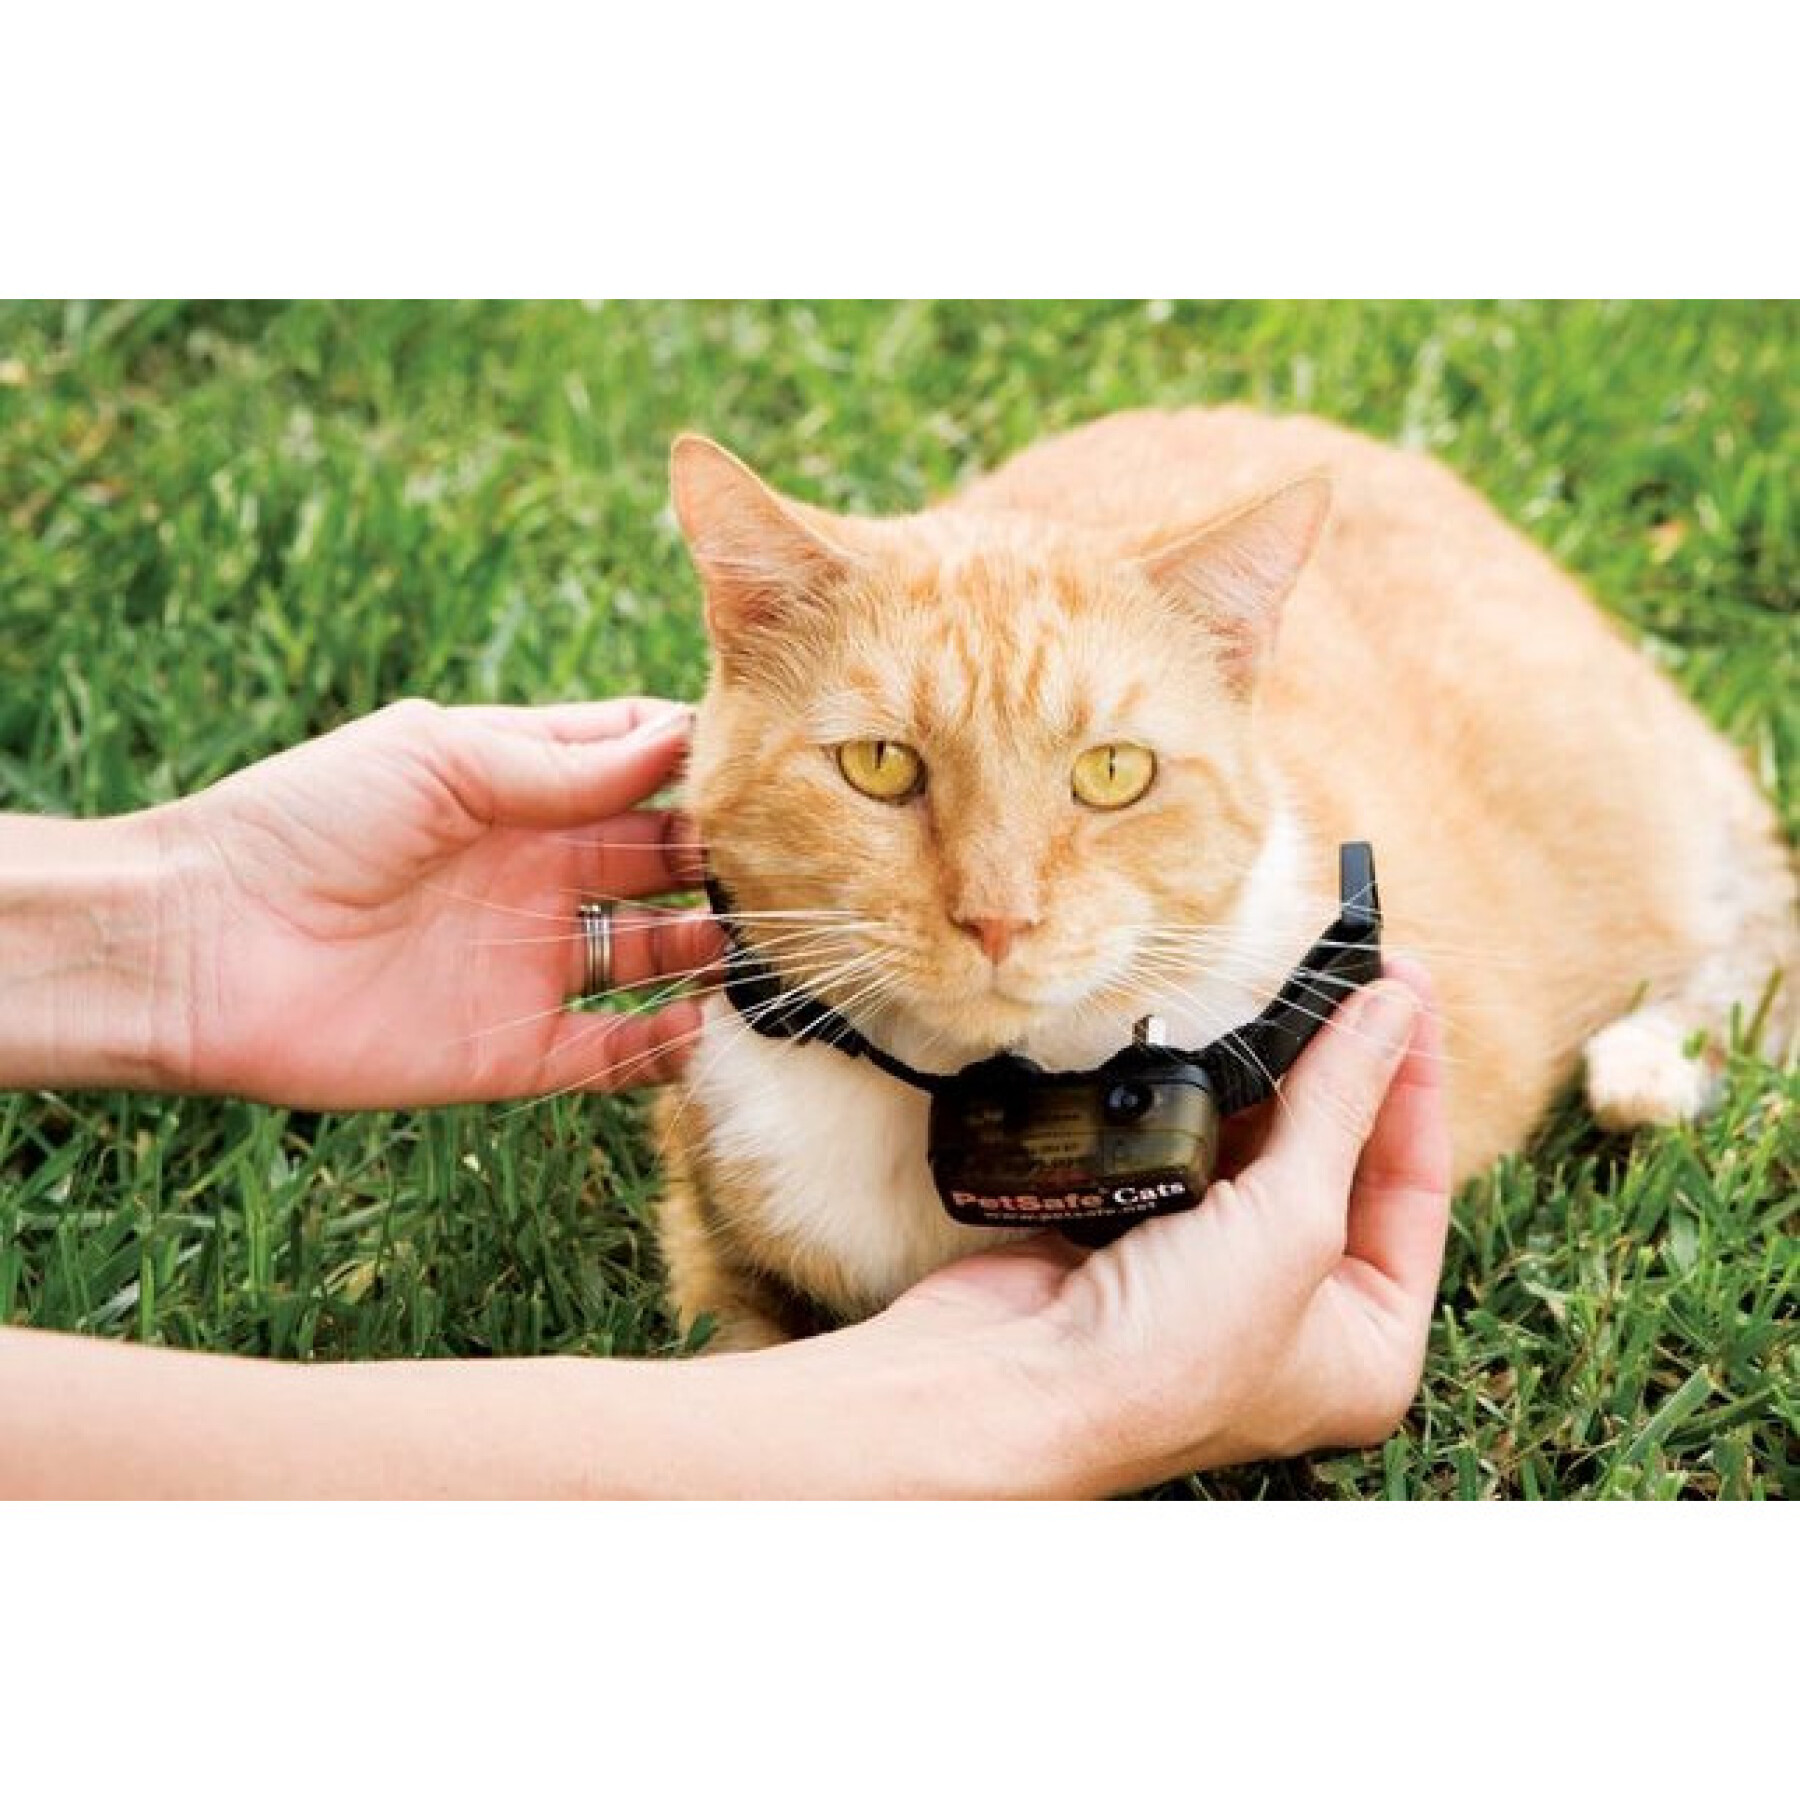 Anti-runaway fence kit for cats PetSafe Premium